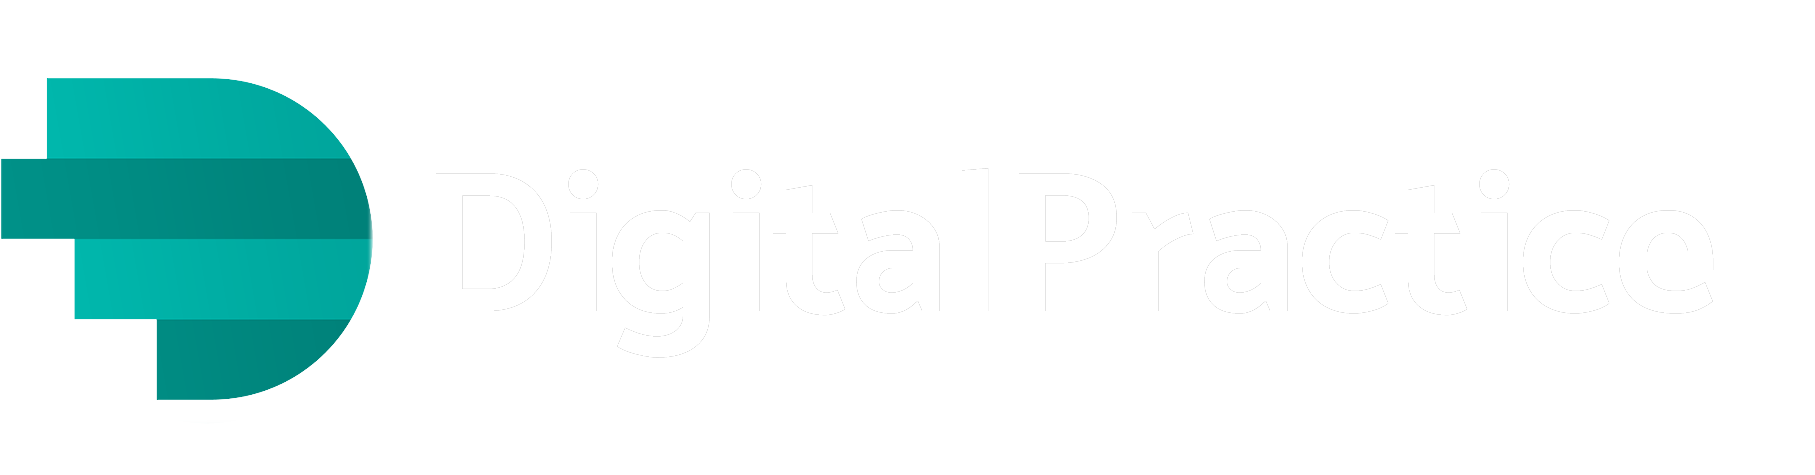 DP logo transparent white png